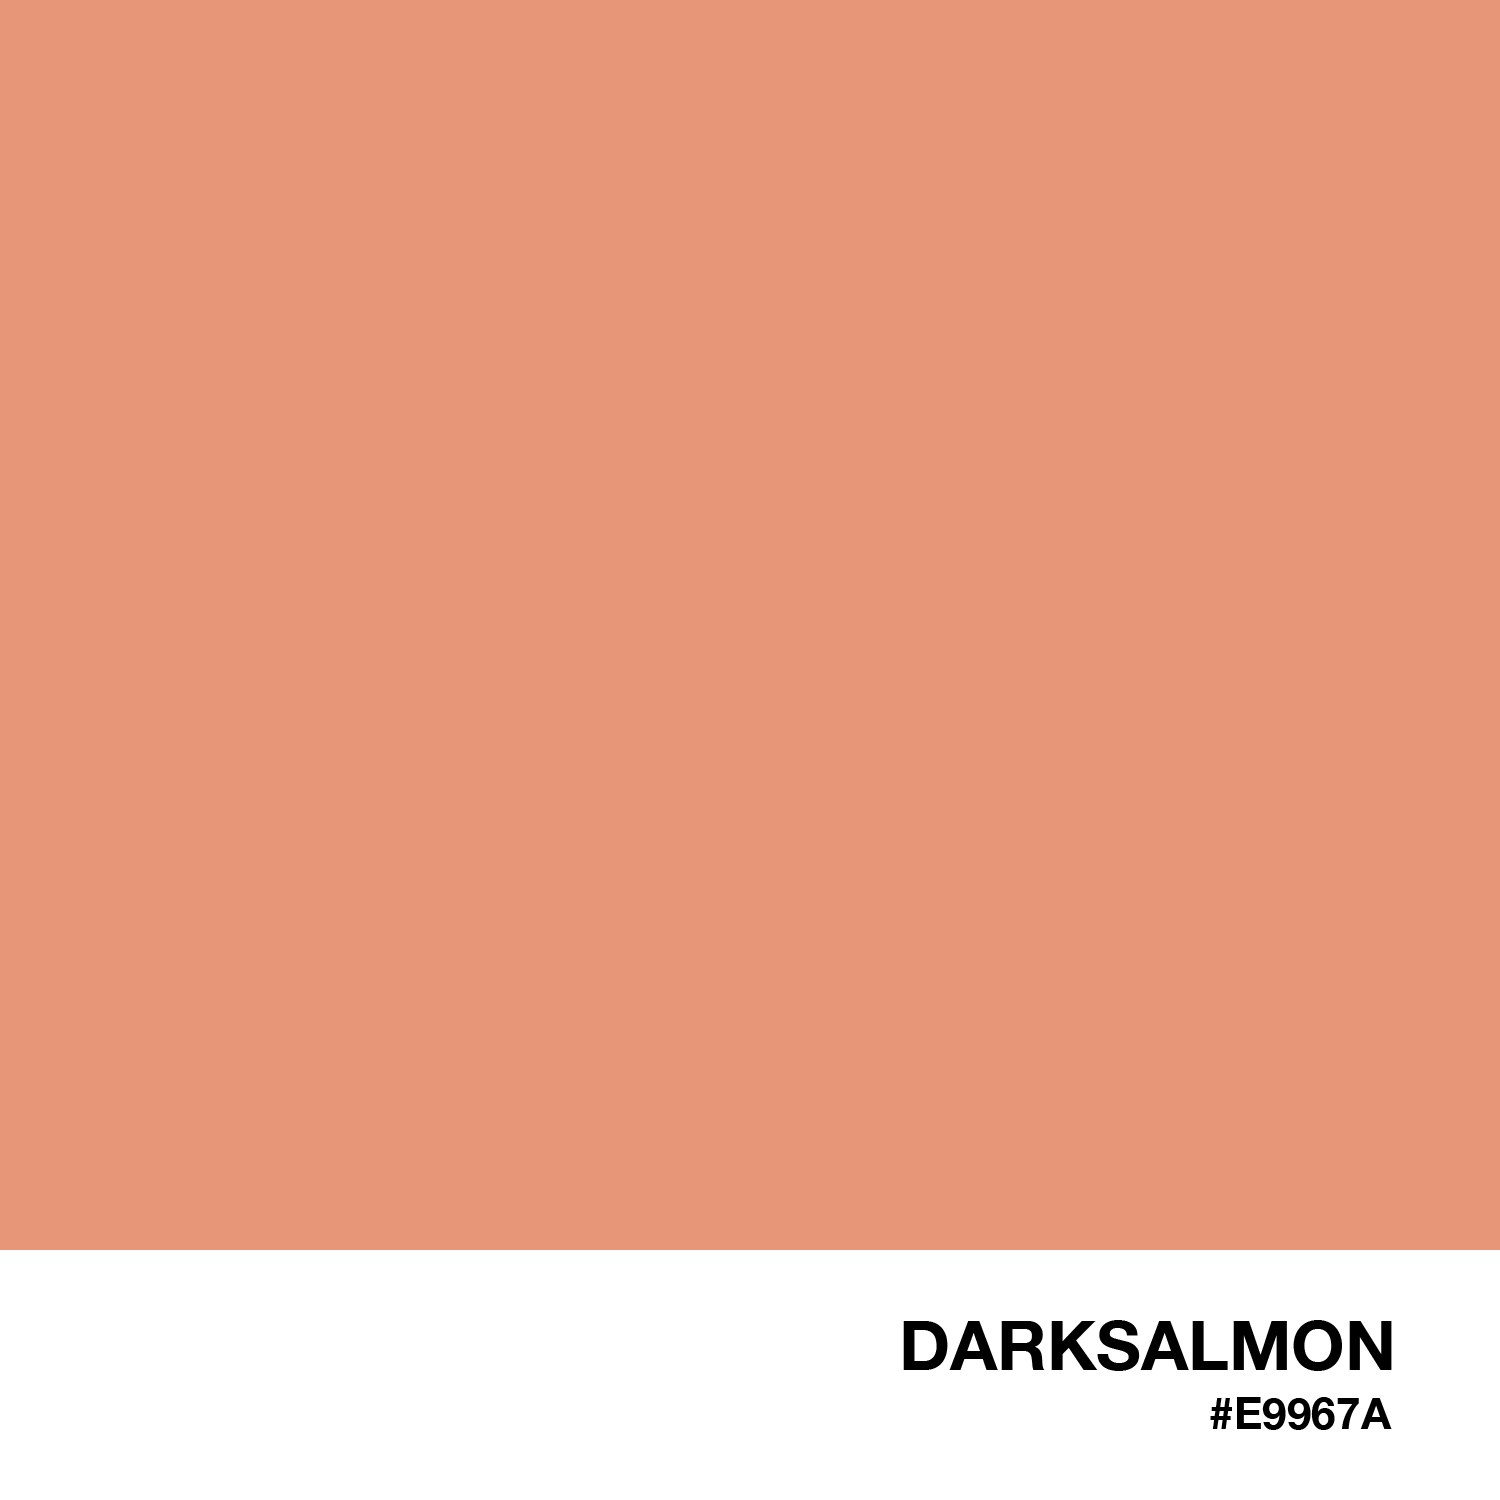 DarkSalmon by ColorBlocks